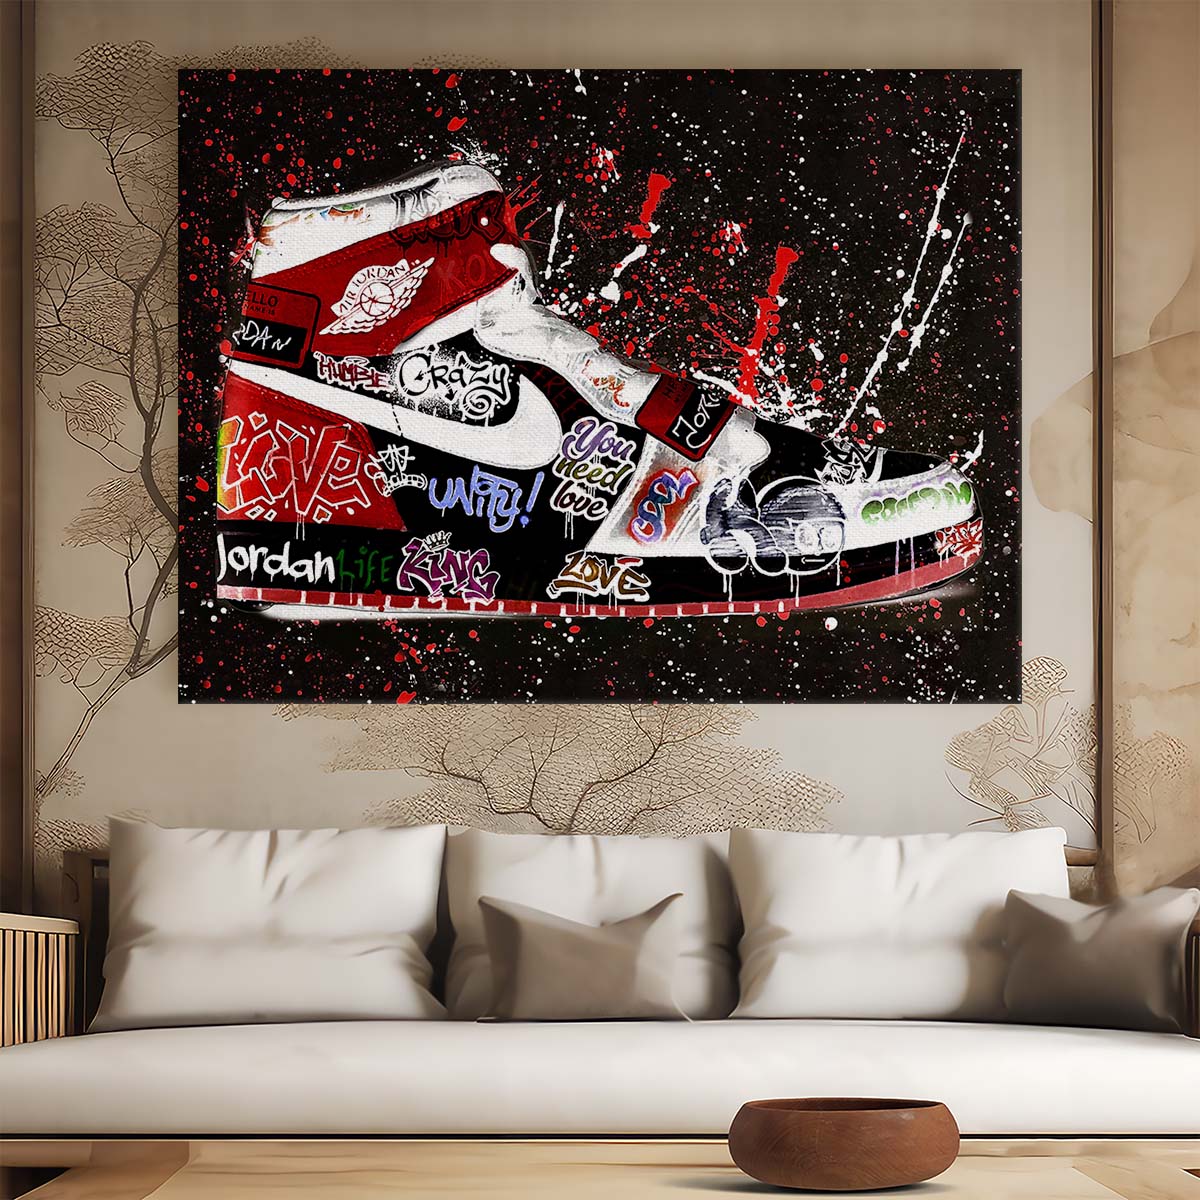 Retro Jordan OG Nike Shoes Graffiti Wall Art by Luxuriance Designs. Made in USA.